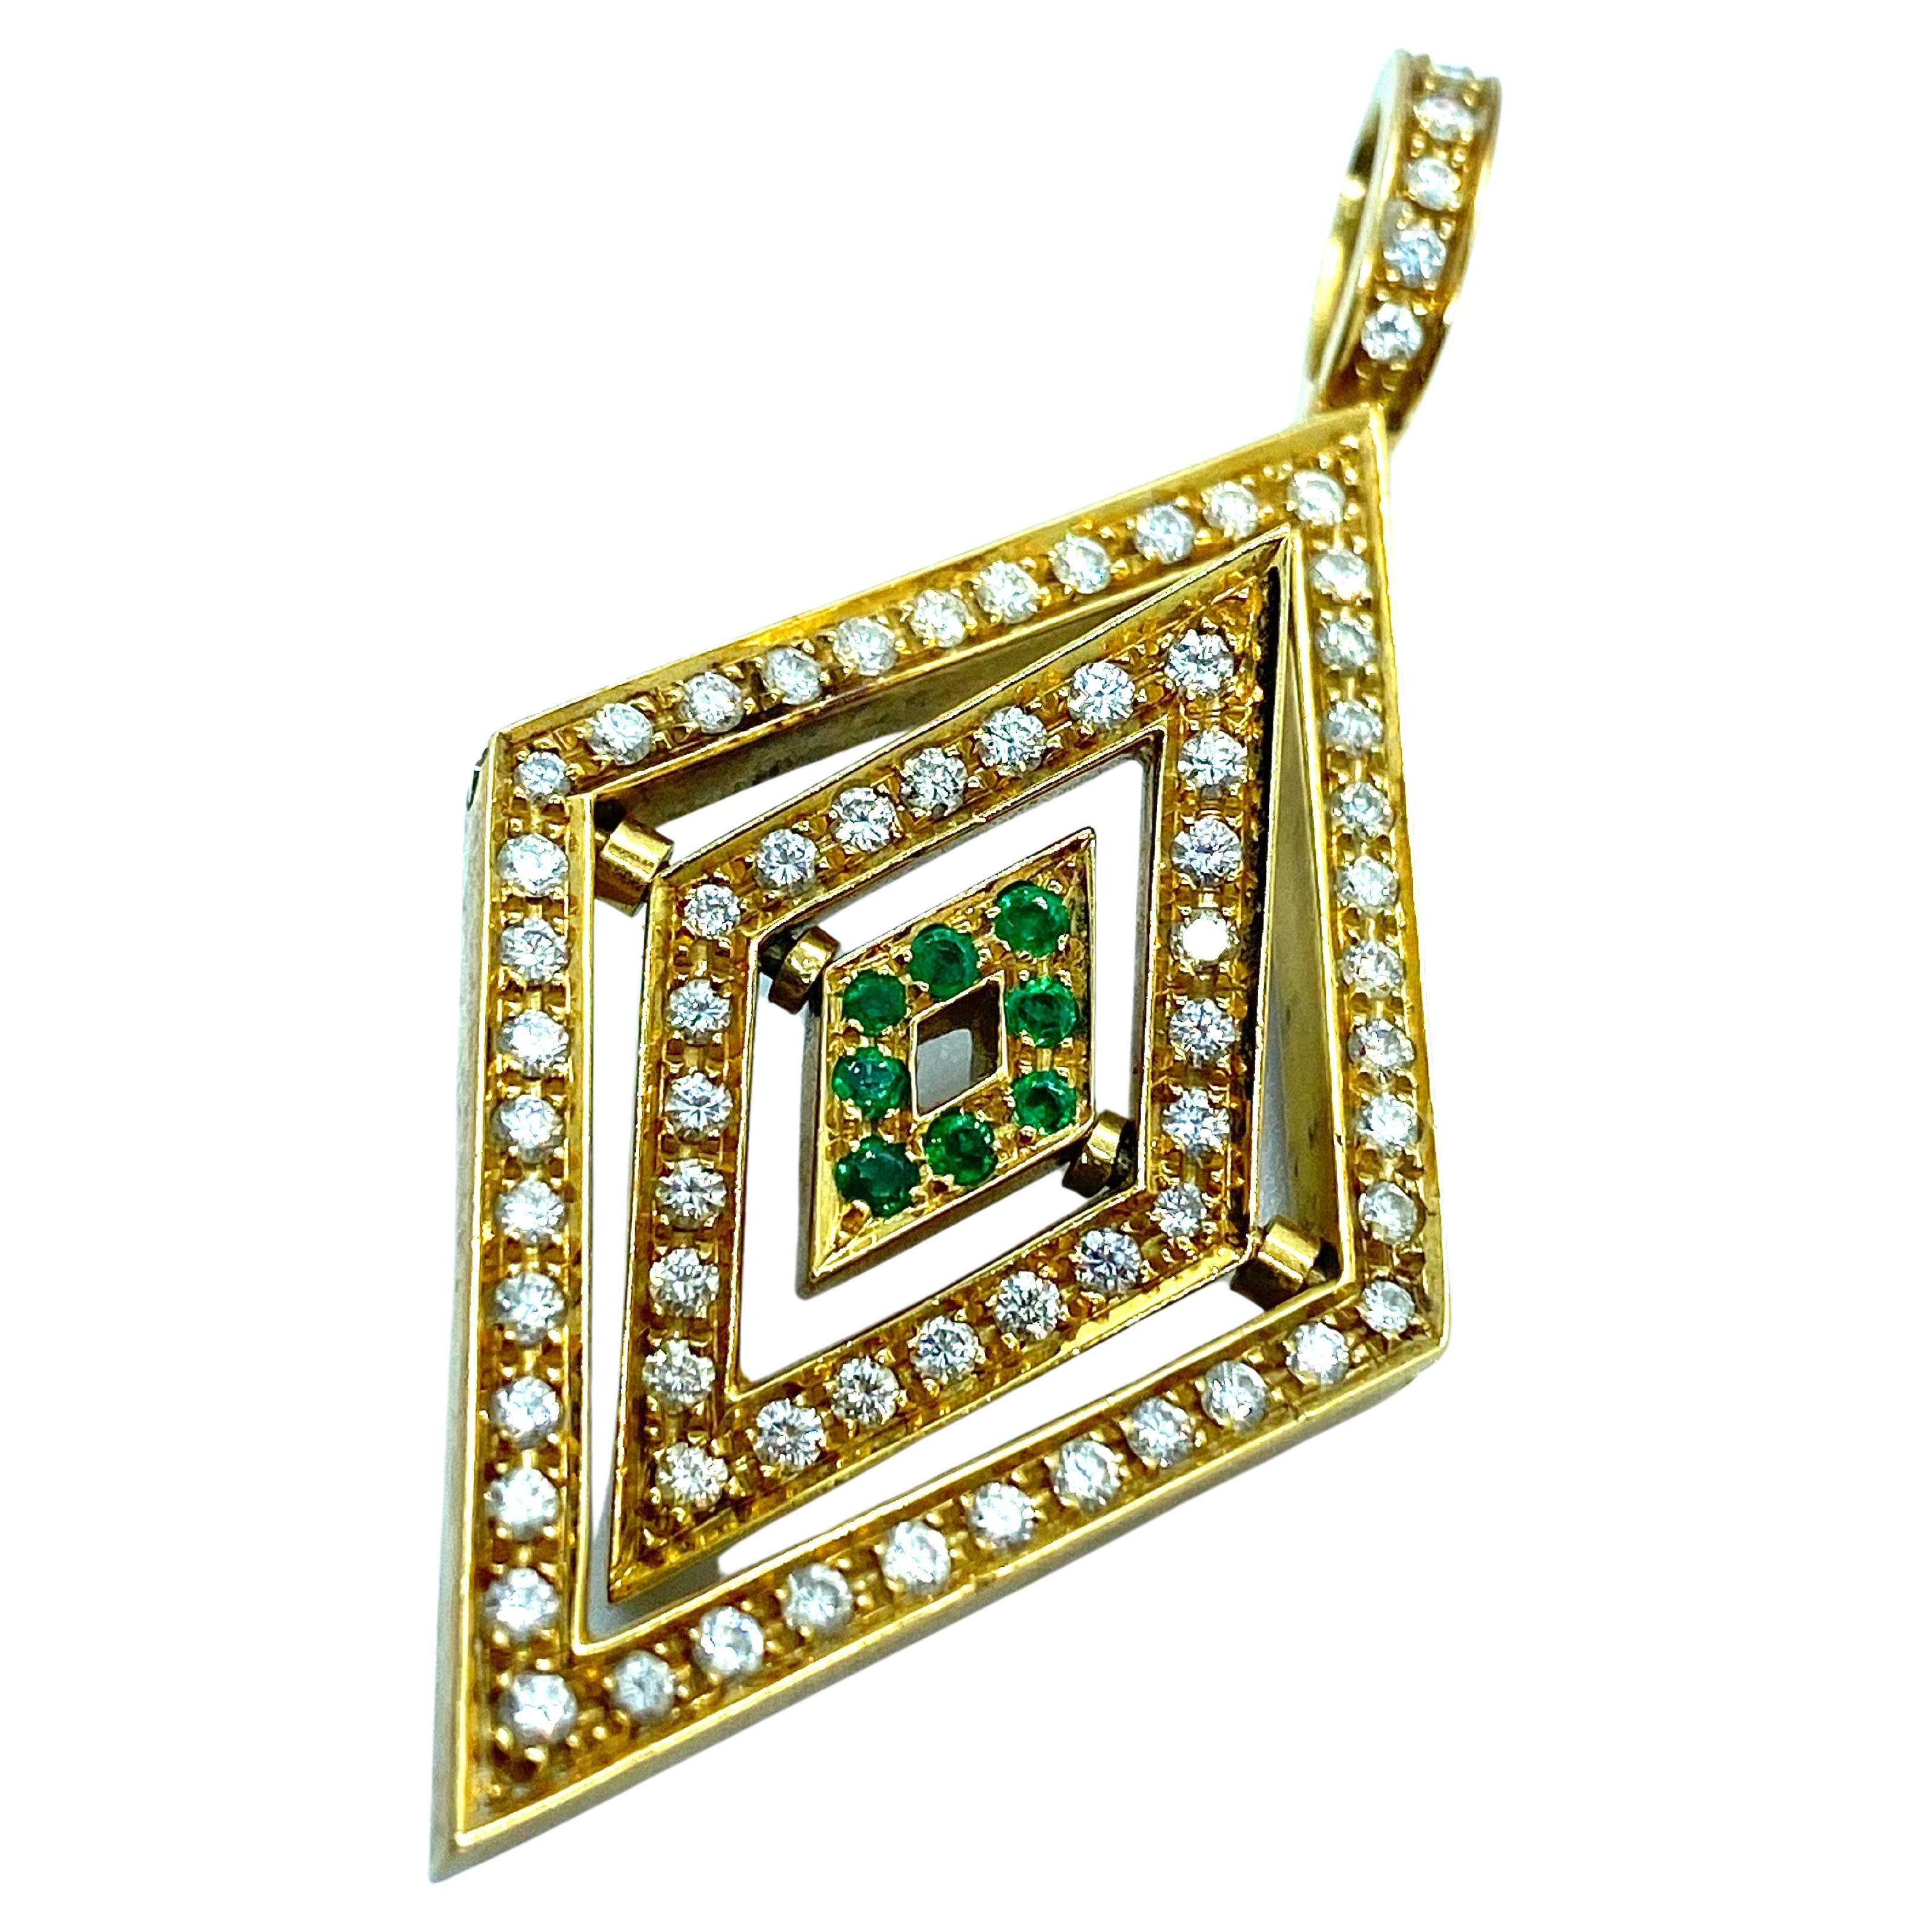 Pivoting gold rhombus pendant For Sale